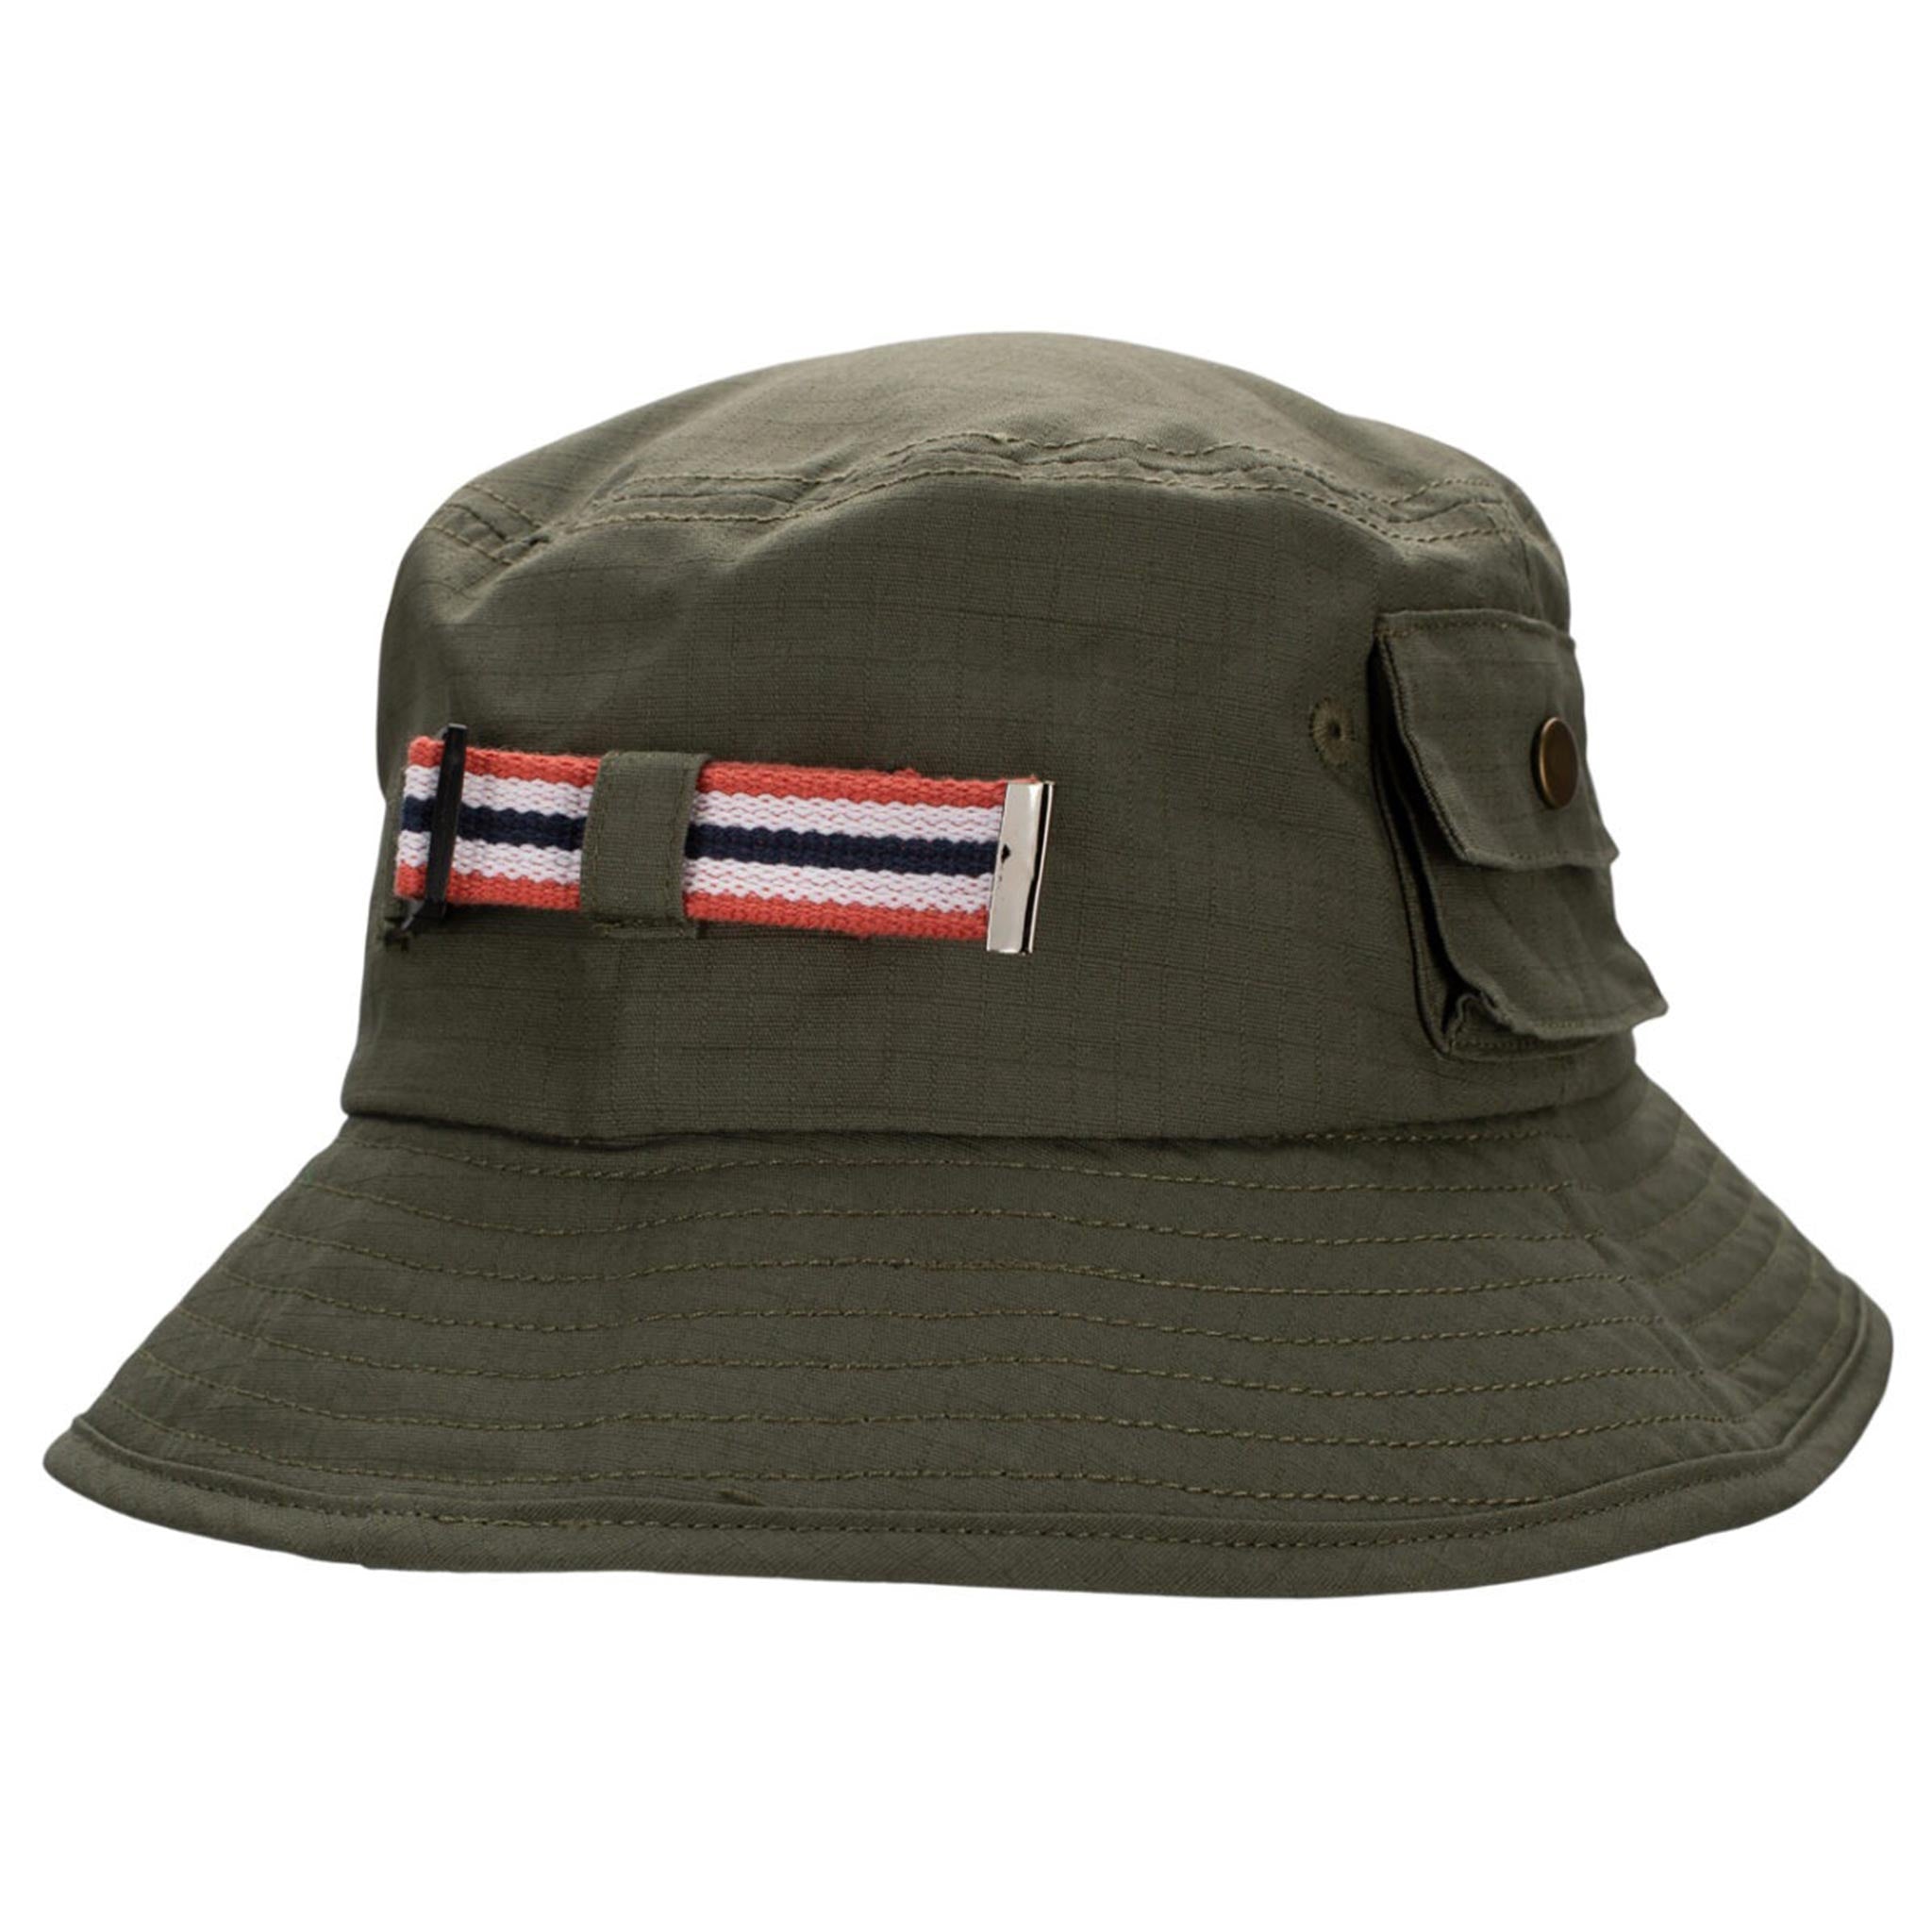 Vagabond Hat in Nato